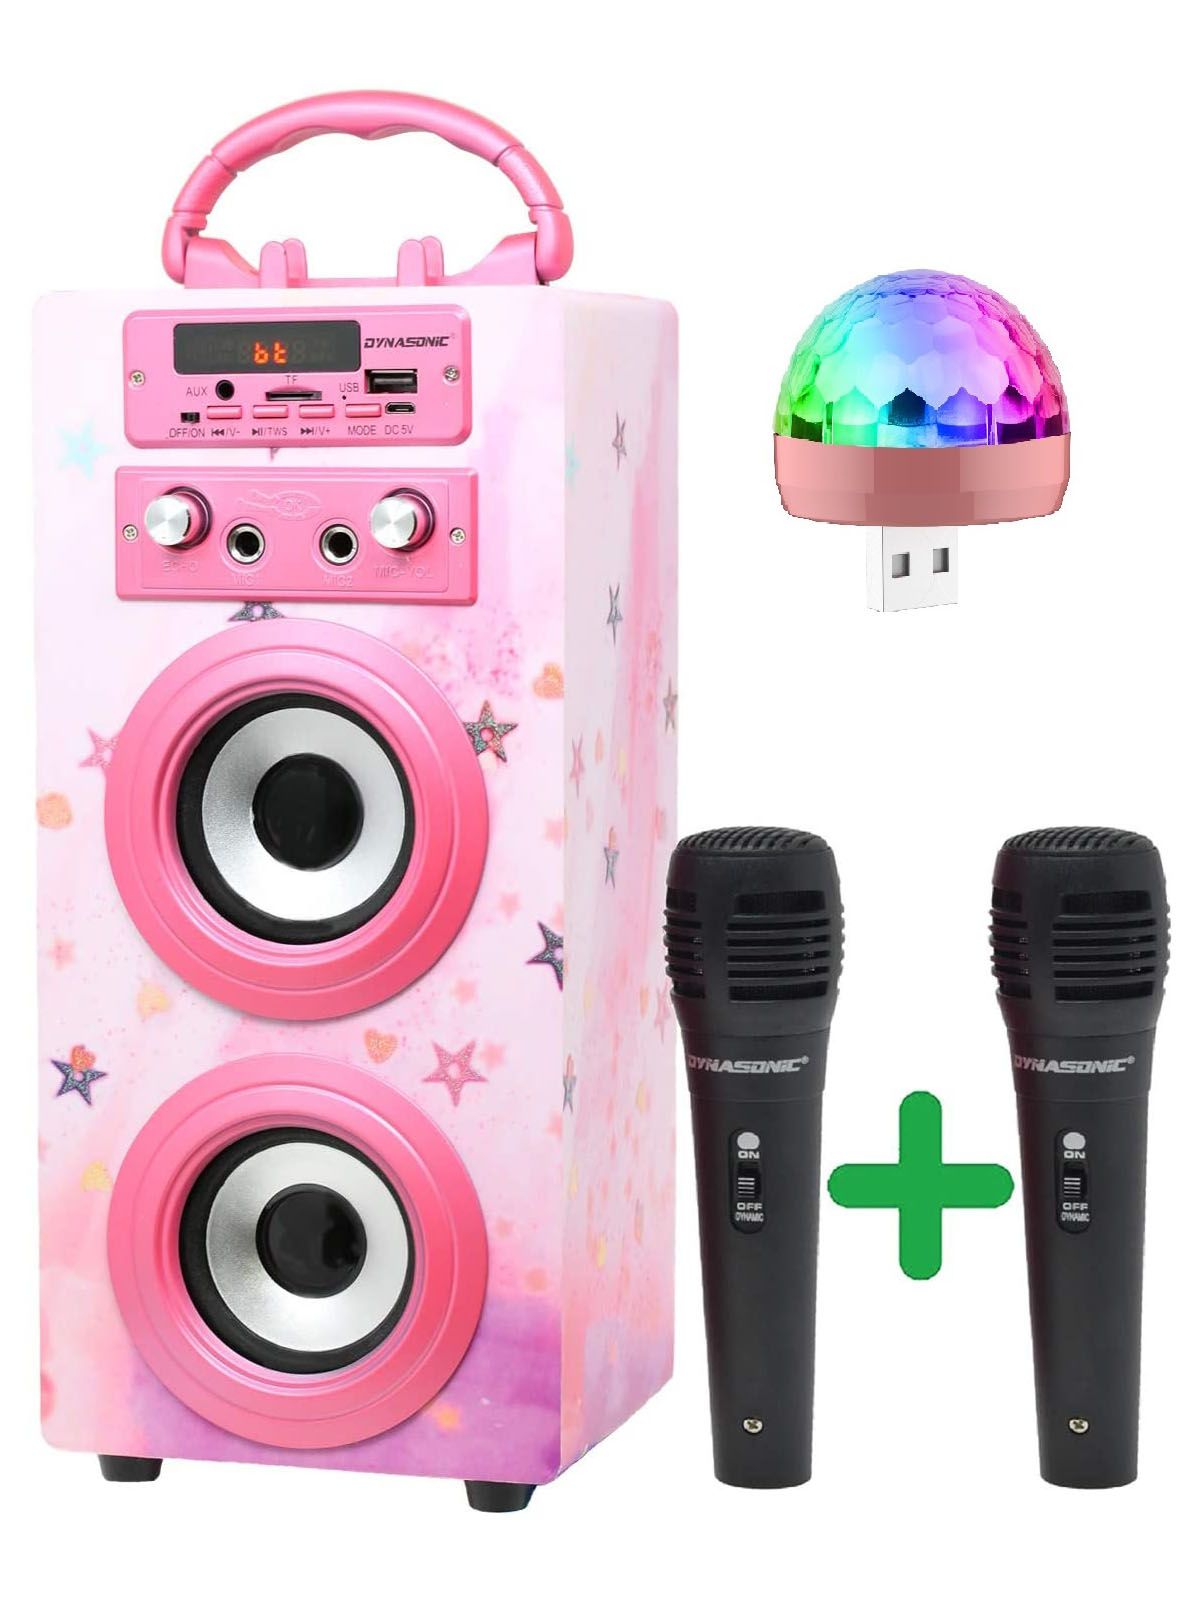 Altavoz Karaoke Serie 025-19 Multicolor LED con 2 micrófonos